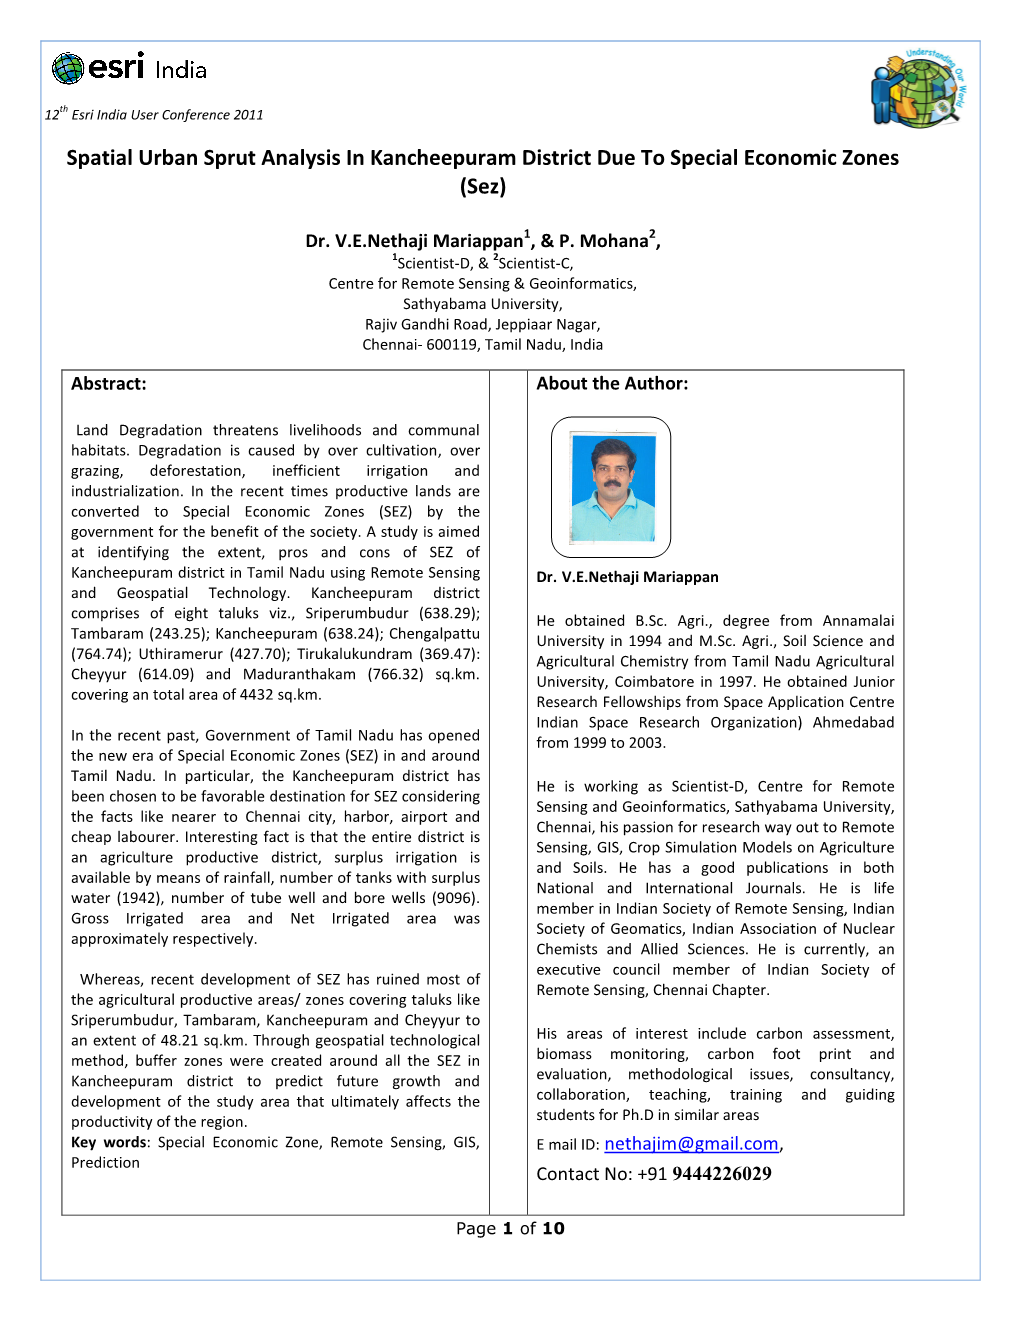 Spatial Urban Sprut Analysis in Kancheepuram District Due to Special Economic Zones (Sez)